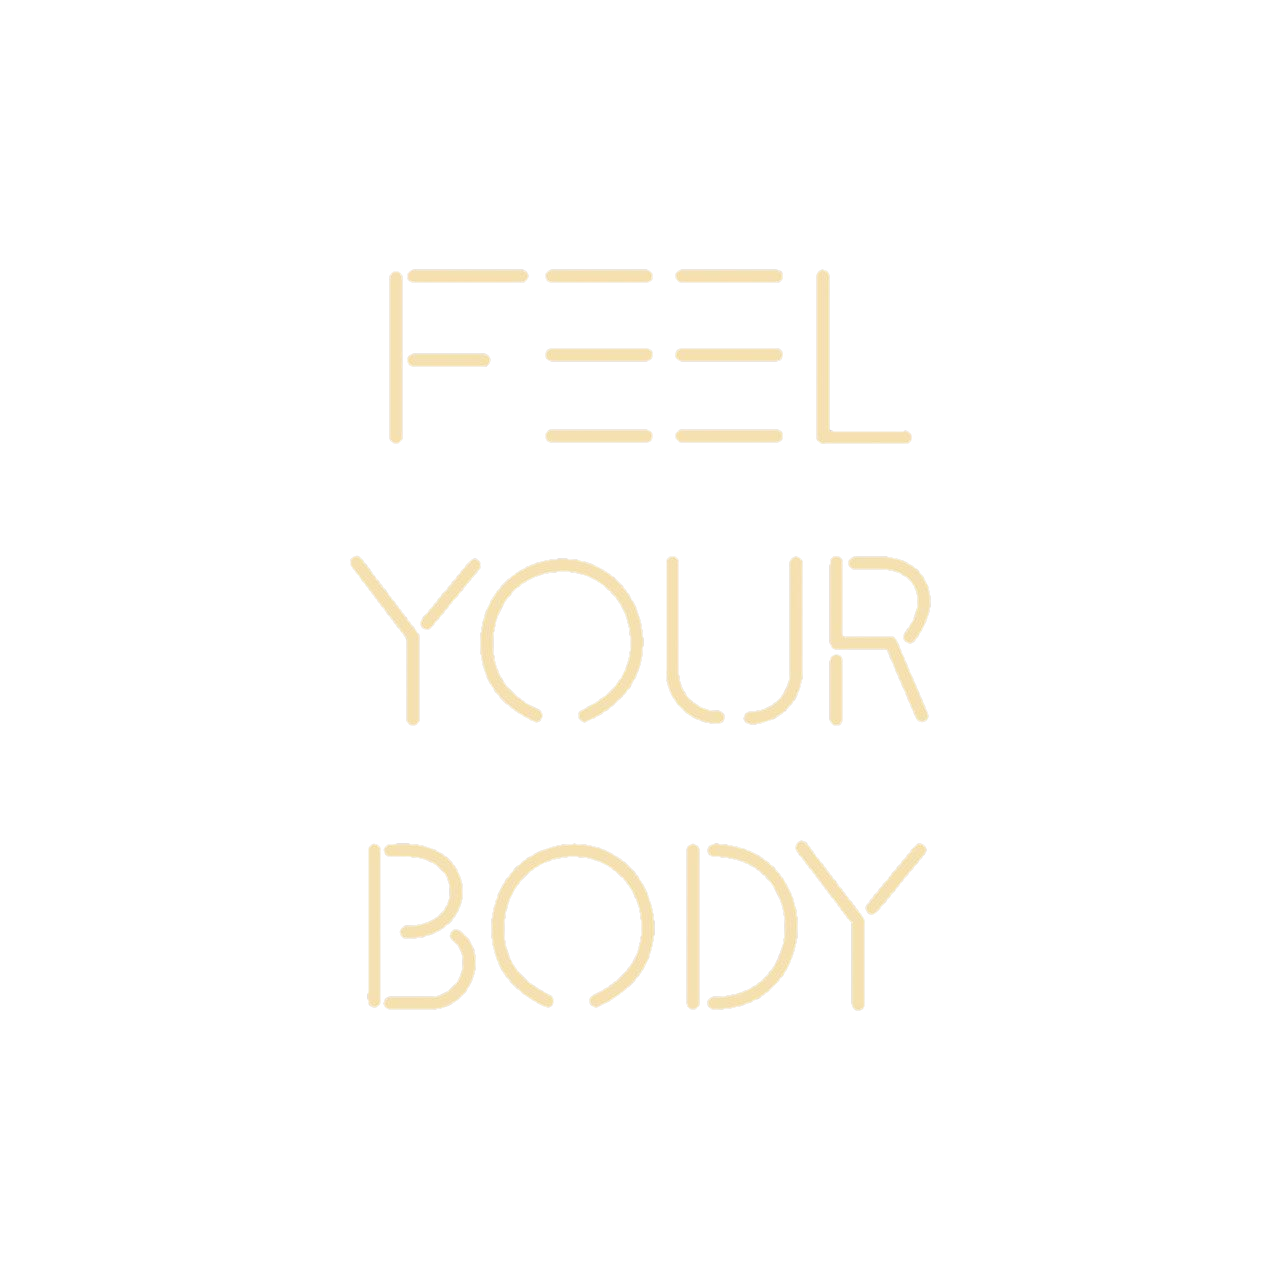 FEEL YOUR BODY